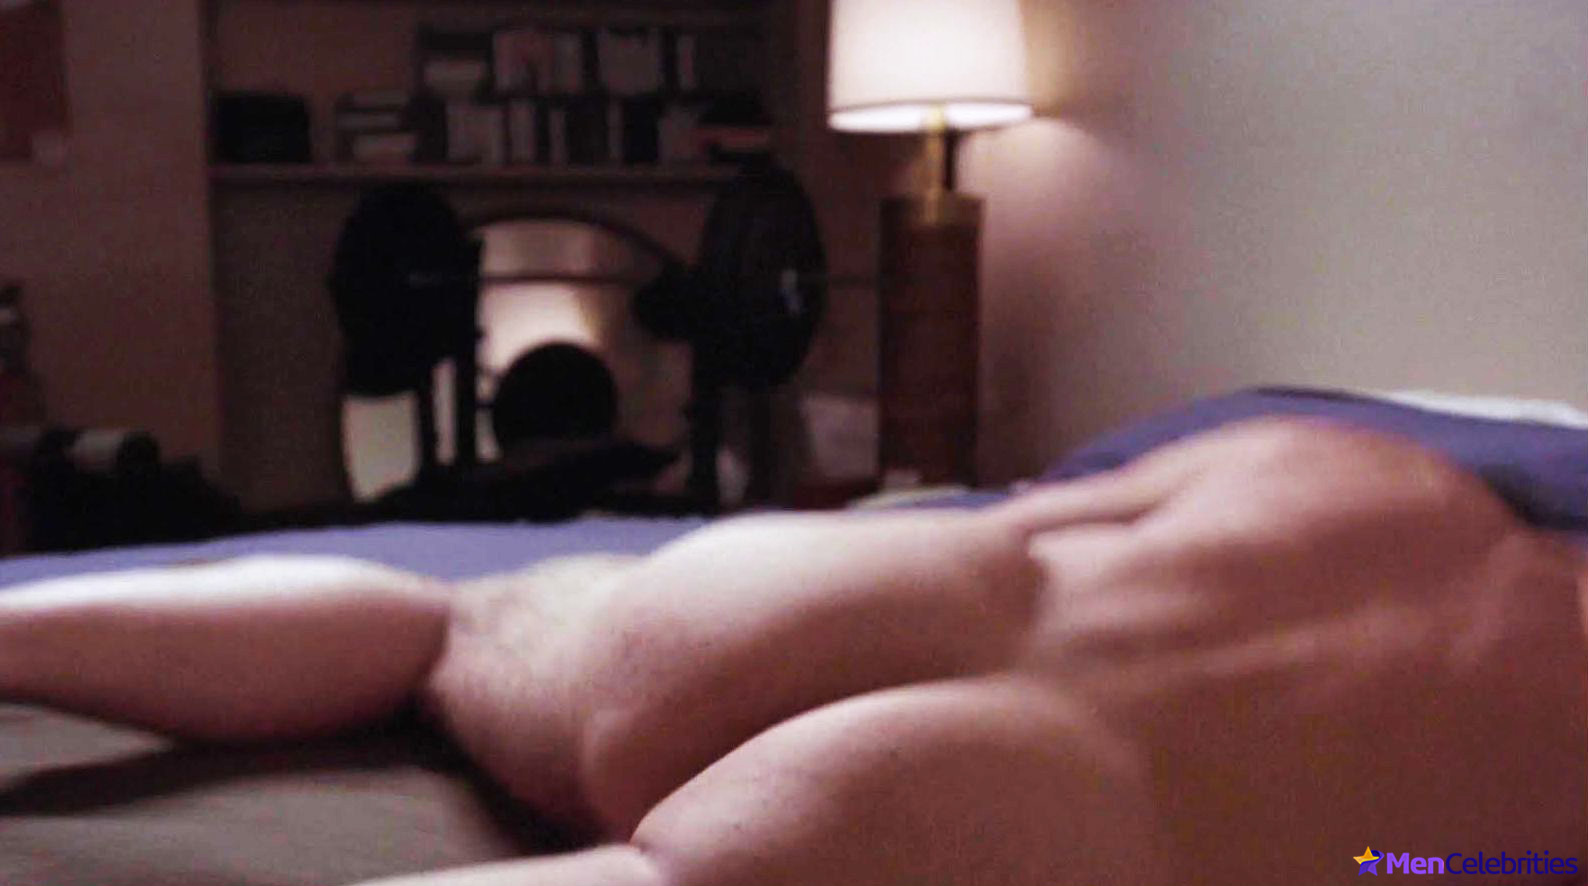 Joseph Gordon-Levitt nude and gay sex scenes.